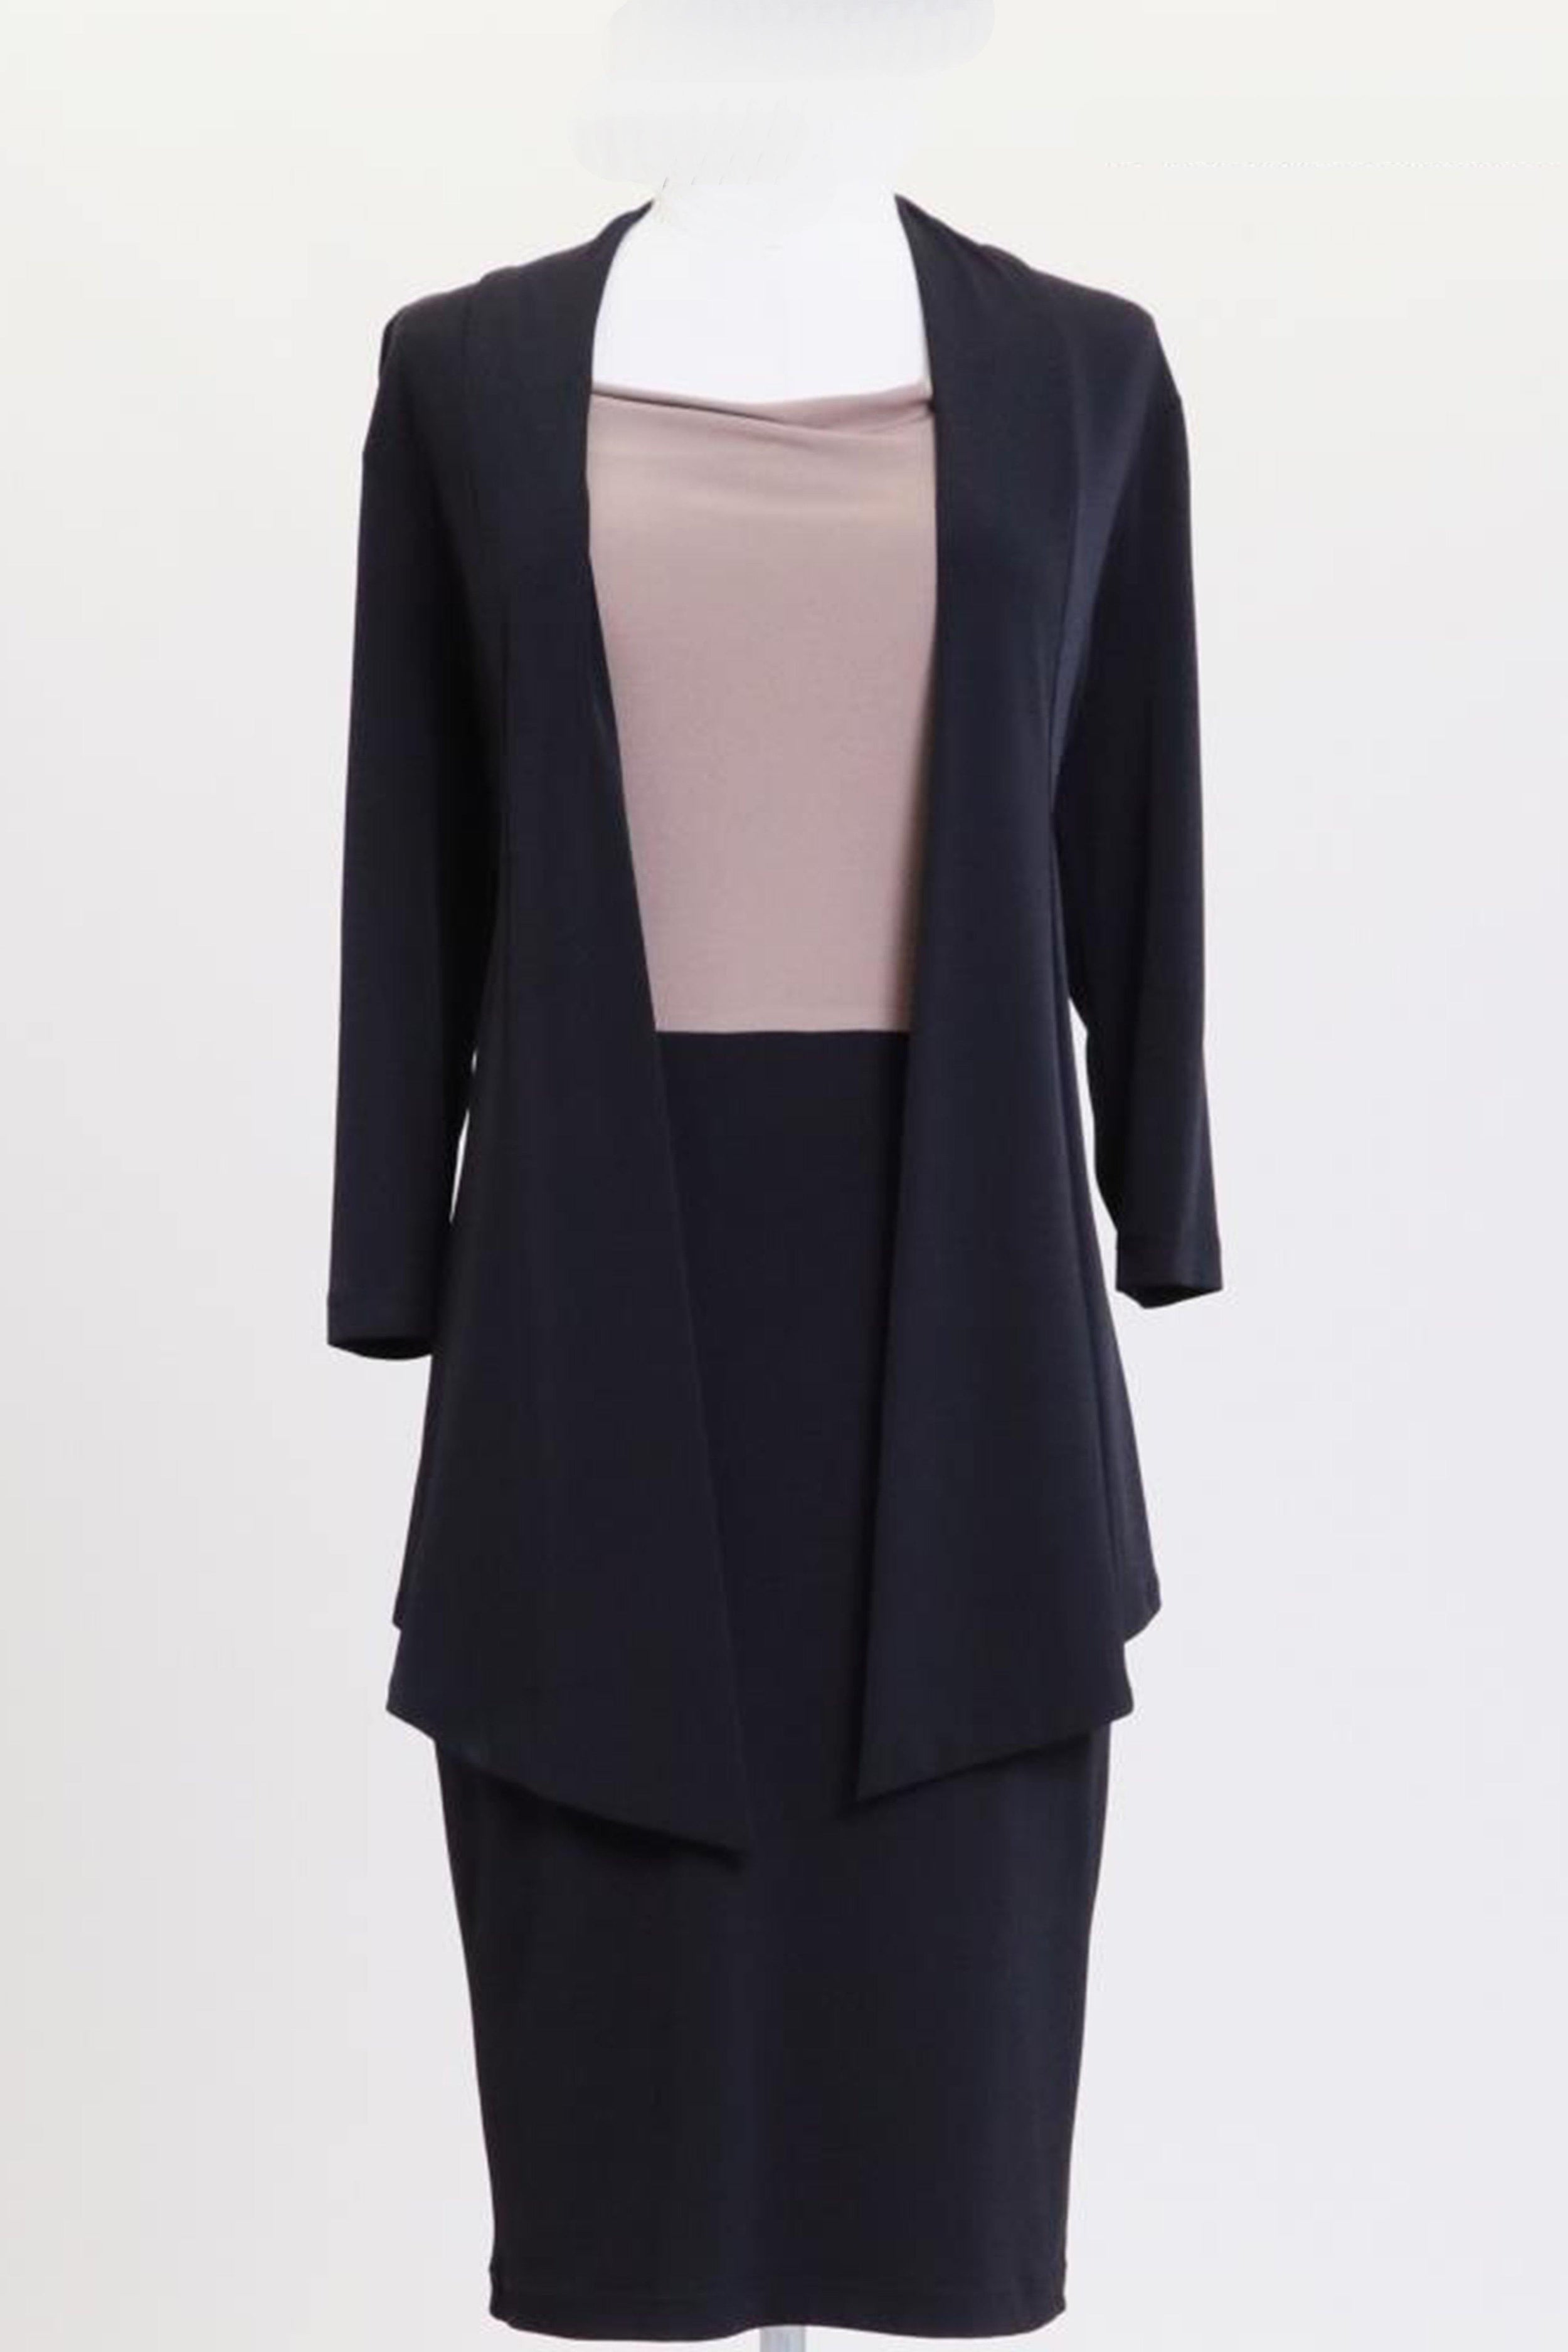 Connected Apparel Plus Size Short Jacket Dress - The Dress Outlet